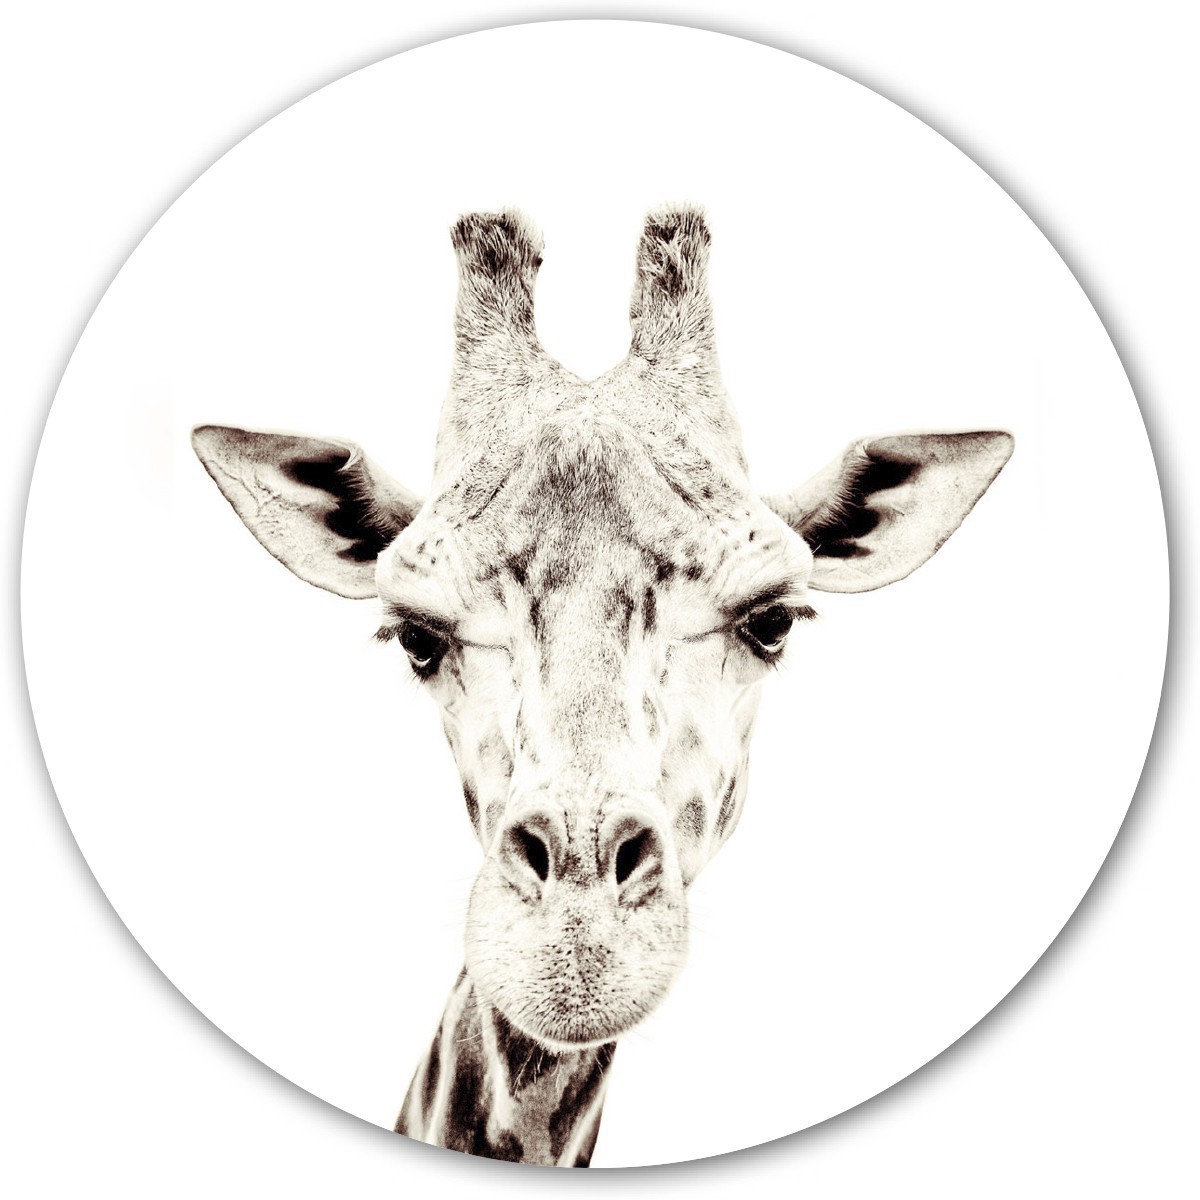 Sticker magnétique Girafe de Groovy Magnets - autocollant rond, sticker mural imprimé animal